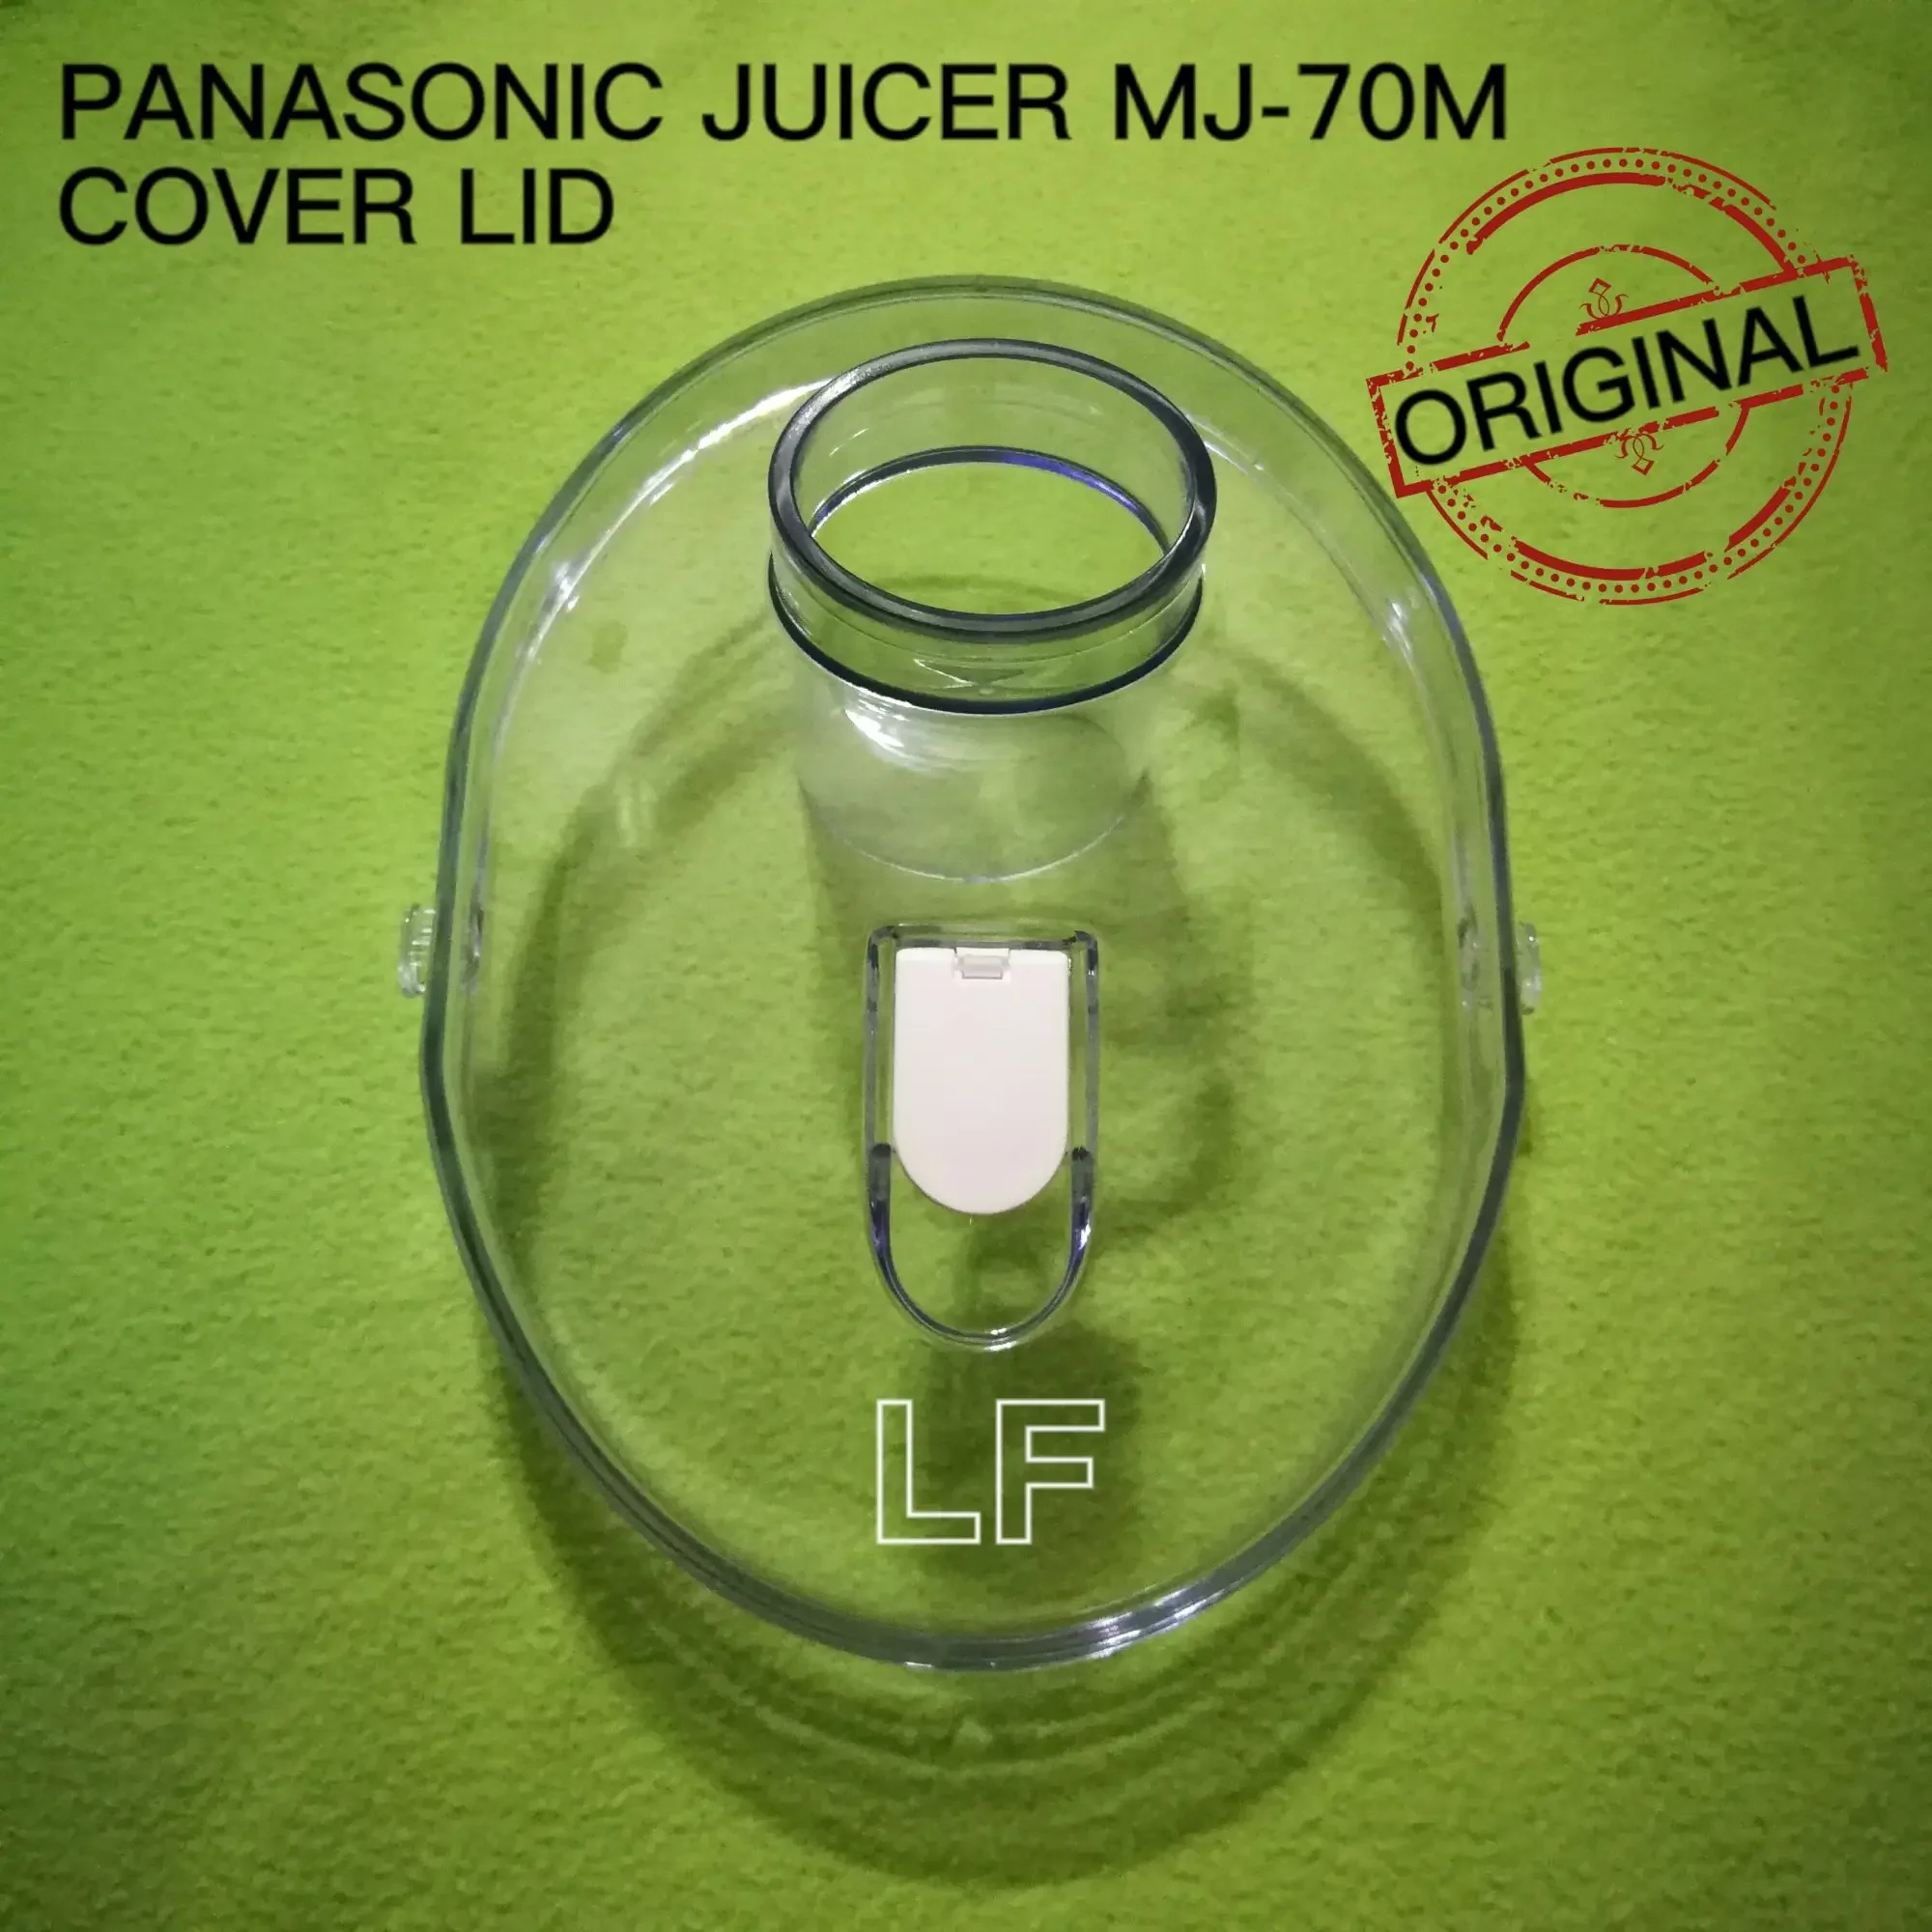 Panasonic MJ-70M Juicer Cover LID (ORIGINAL)